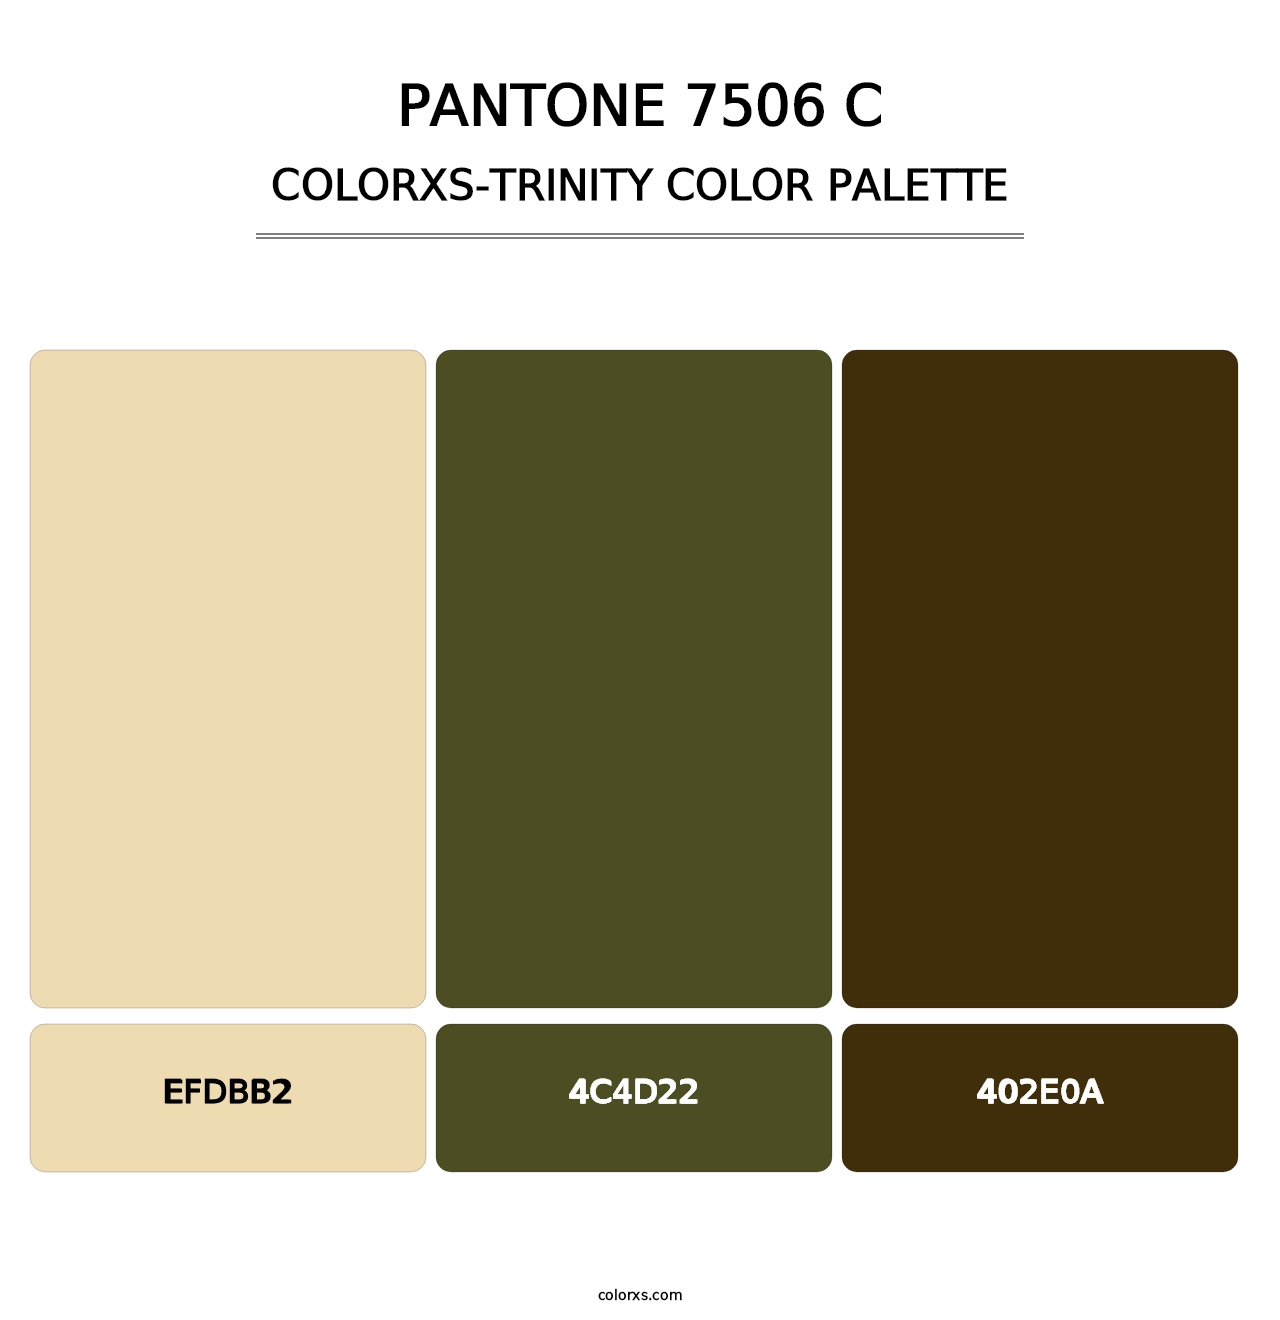 PANTONE 7506 C - Colorxs Trinity Palette